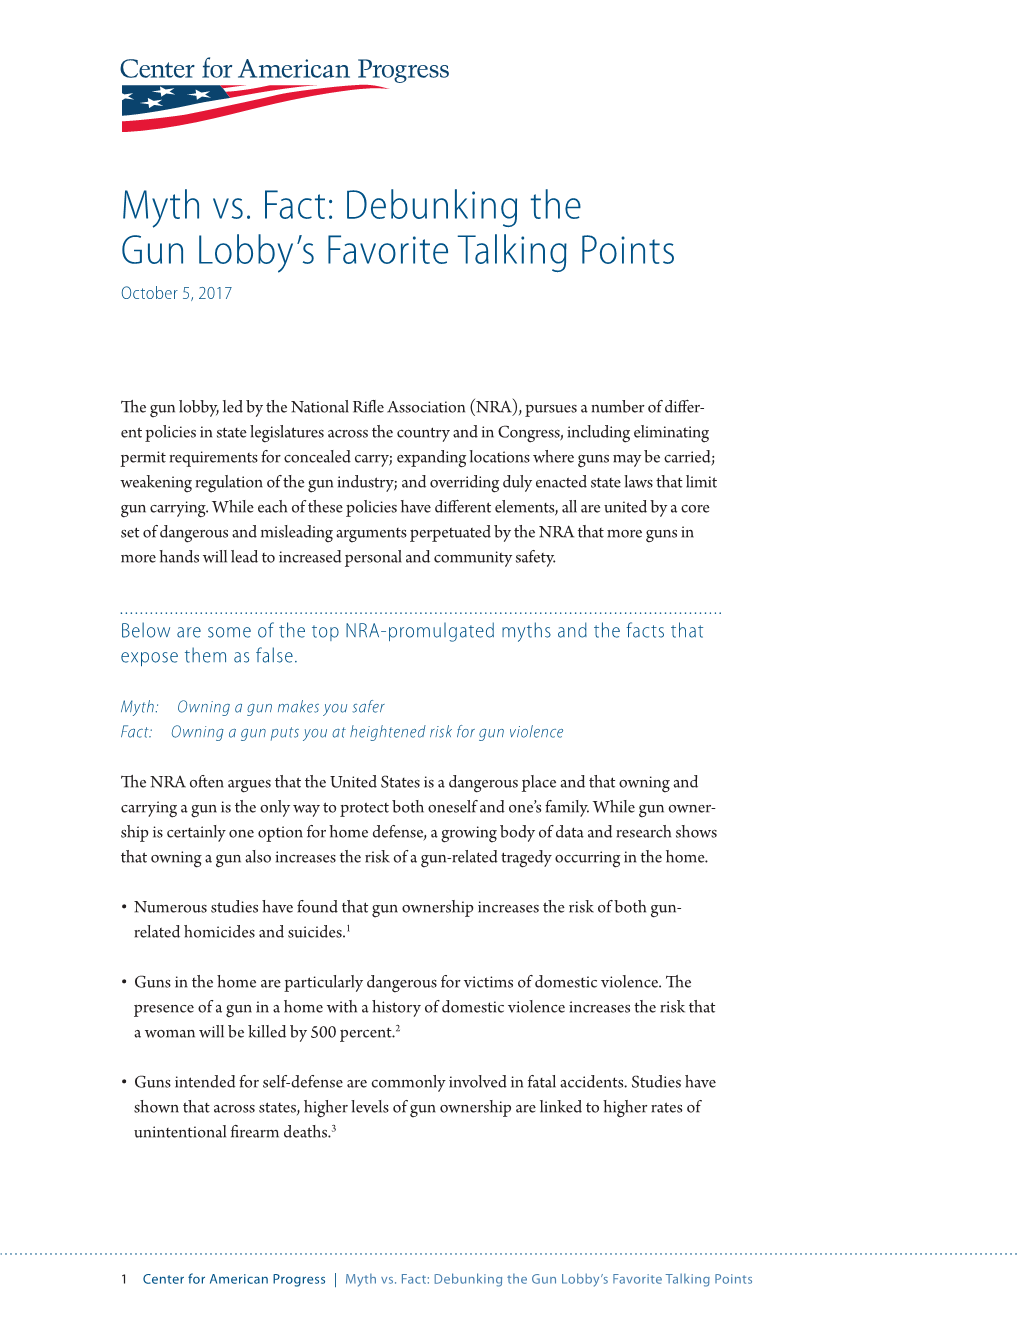 Myth Vs. Fact: Debunking the Gun Lobby's Favorite Talking Points